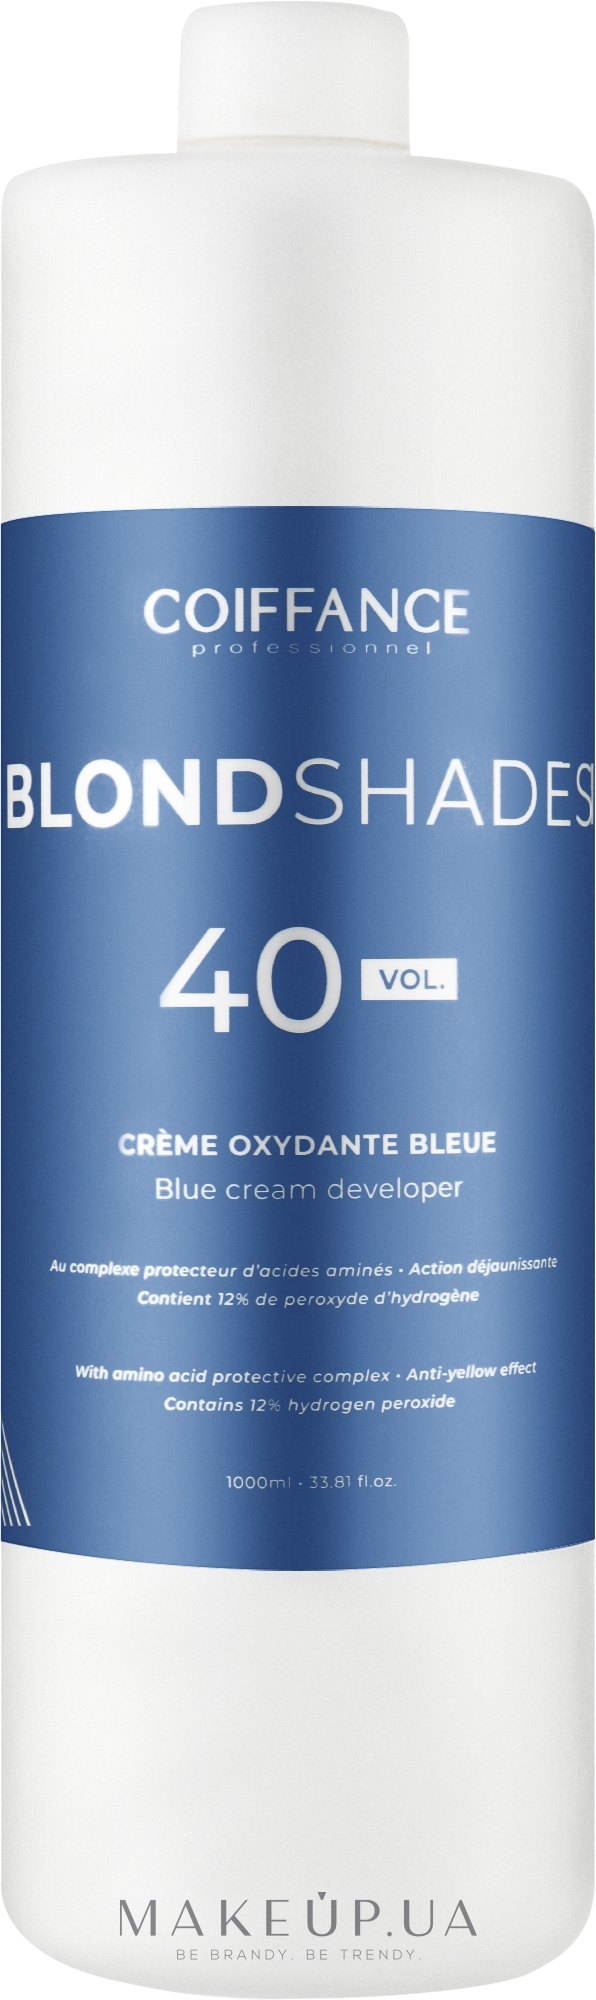 Окислитель - Coiffance Professionnel Blondshades 40 Vol Blue Cream Developer — фото 1000ml